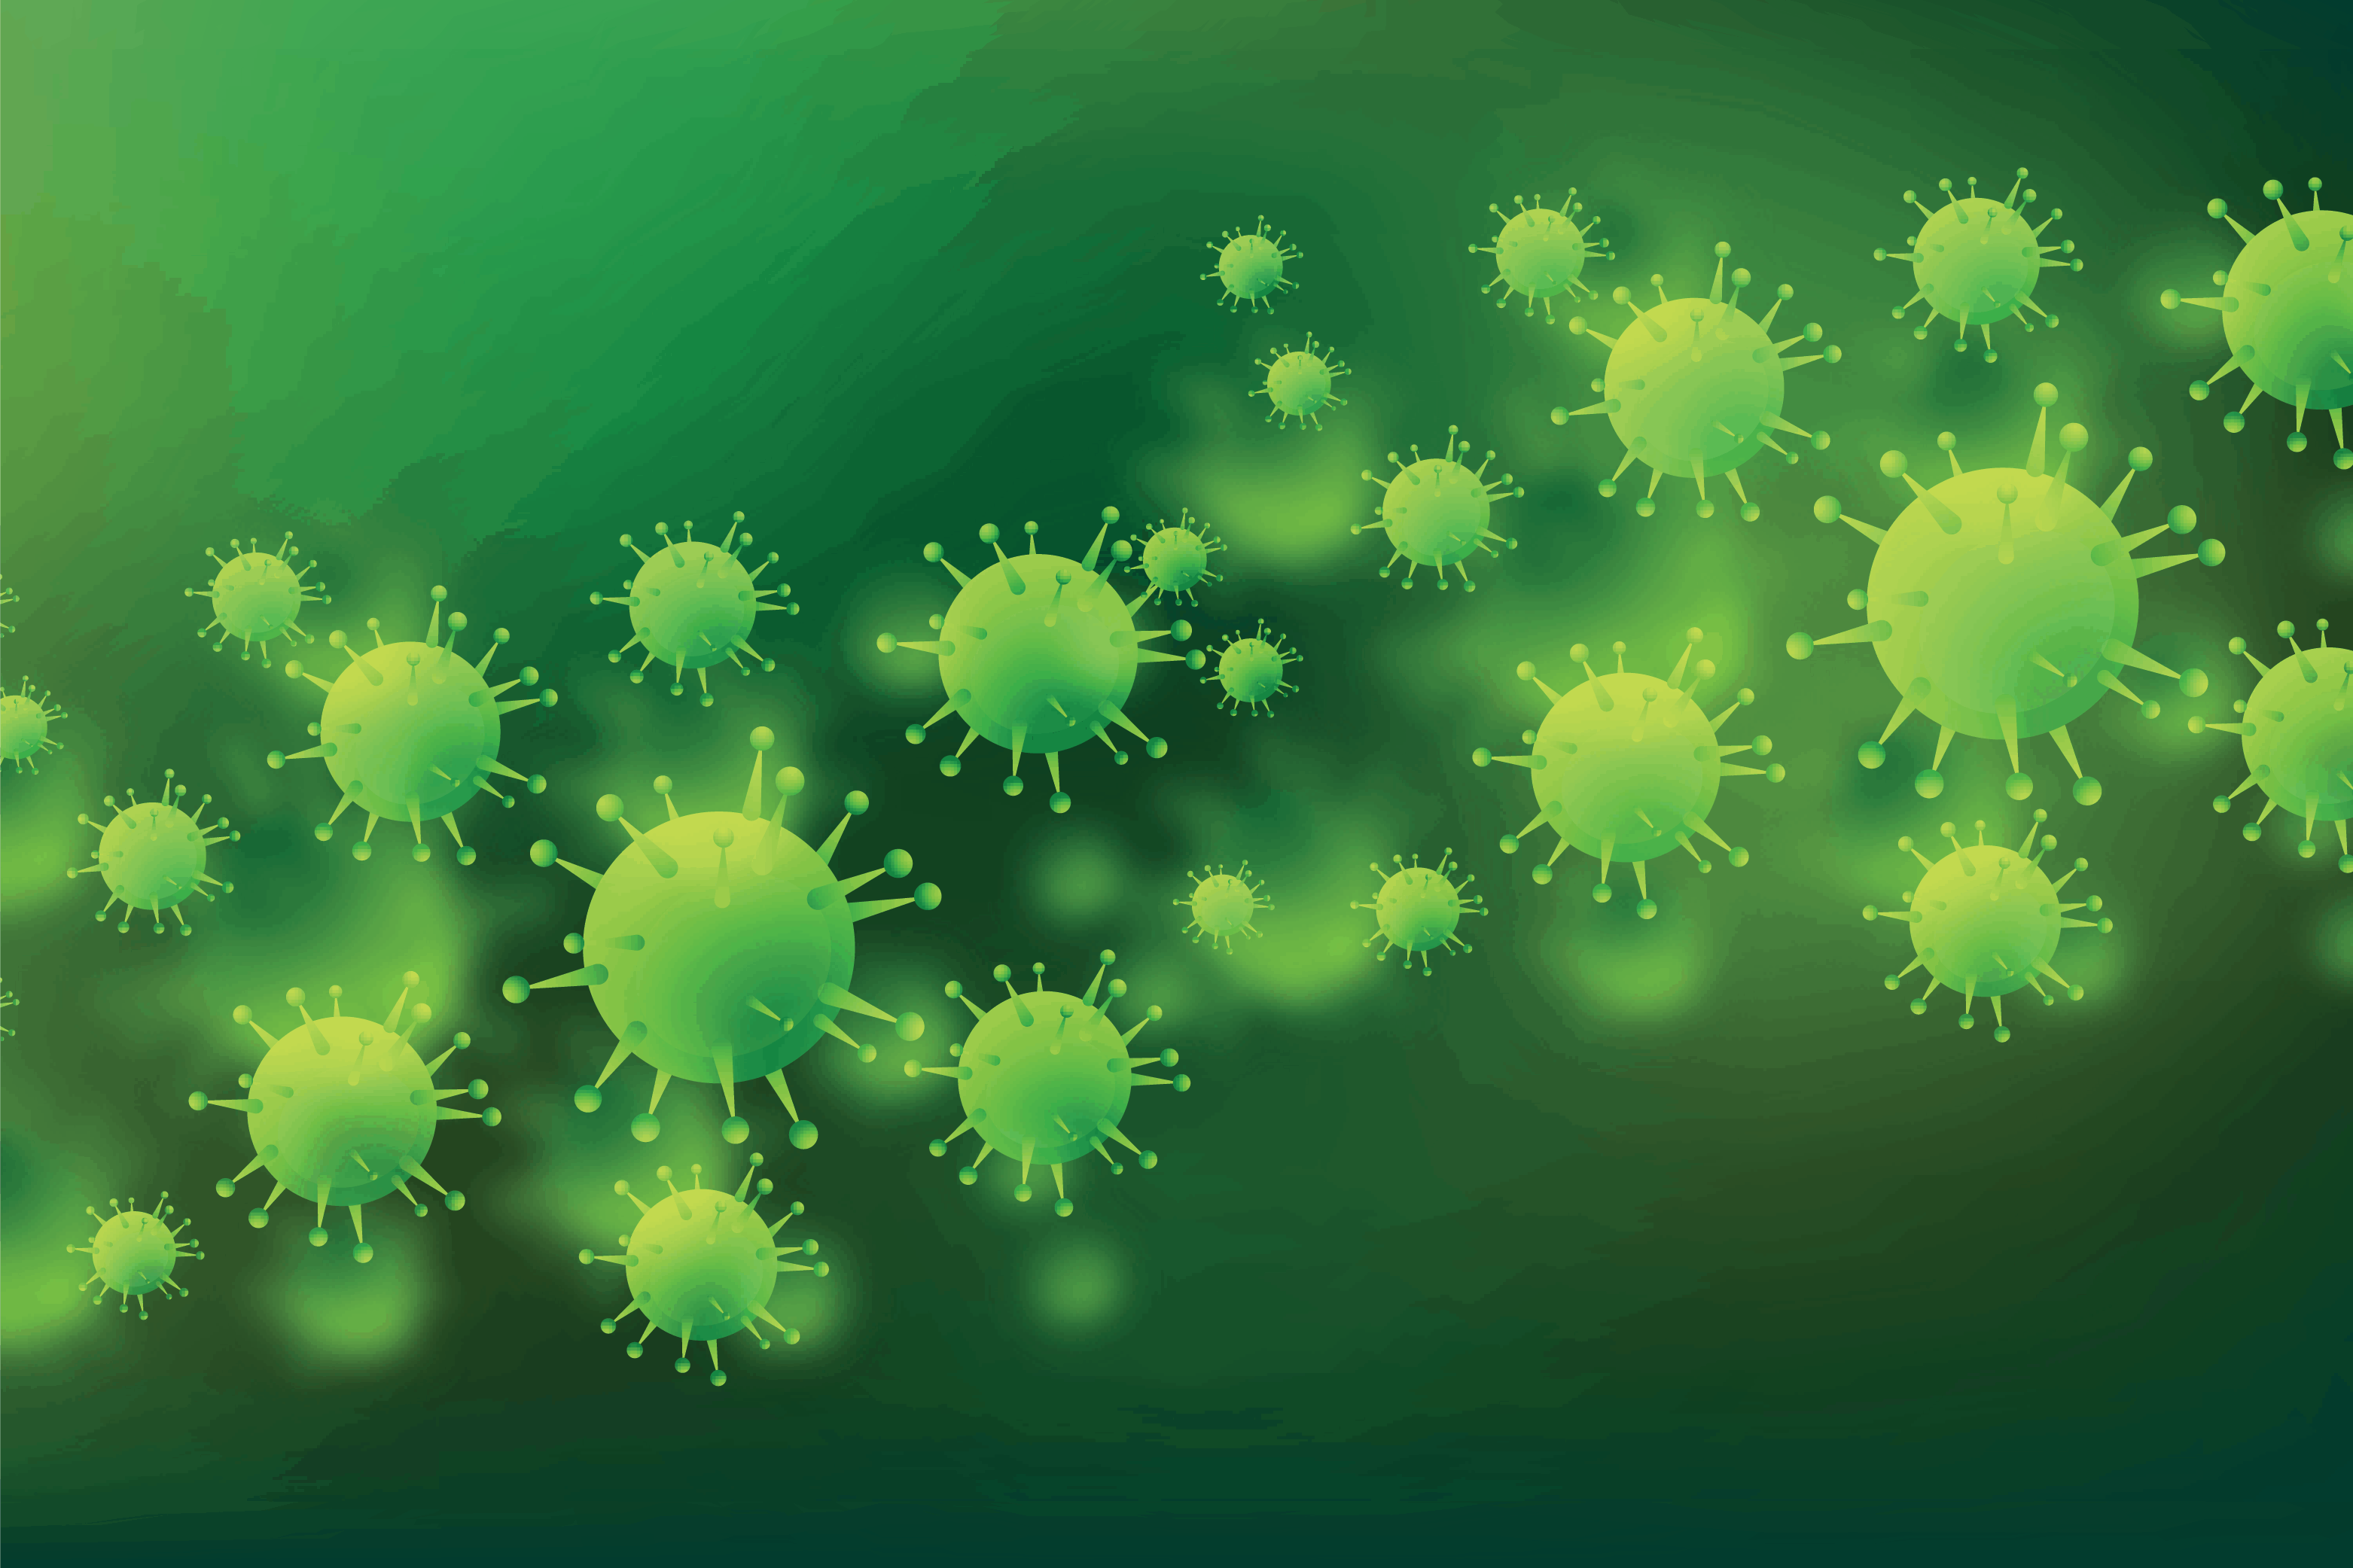 Картинки про вируса. Вирус. Бактерия коронавируса. Вирусы бактерии микробы. Коронавирус бактерия.